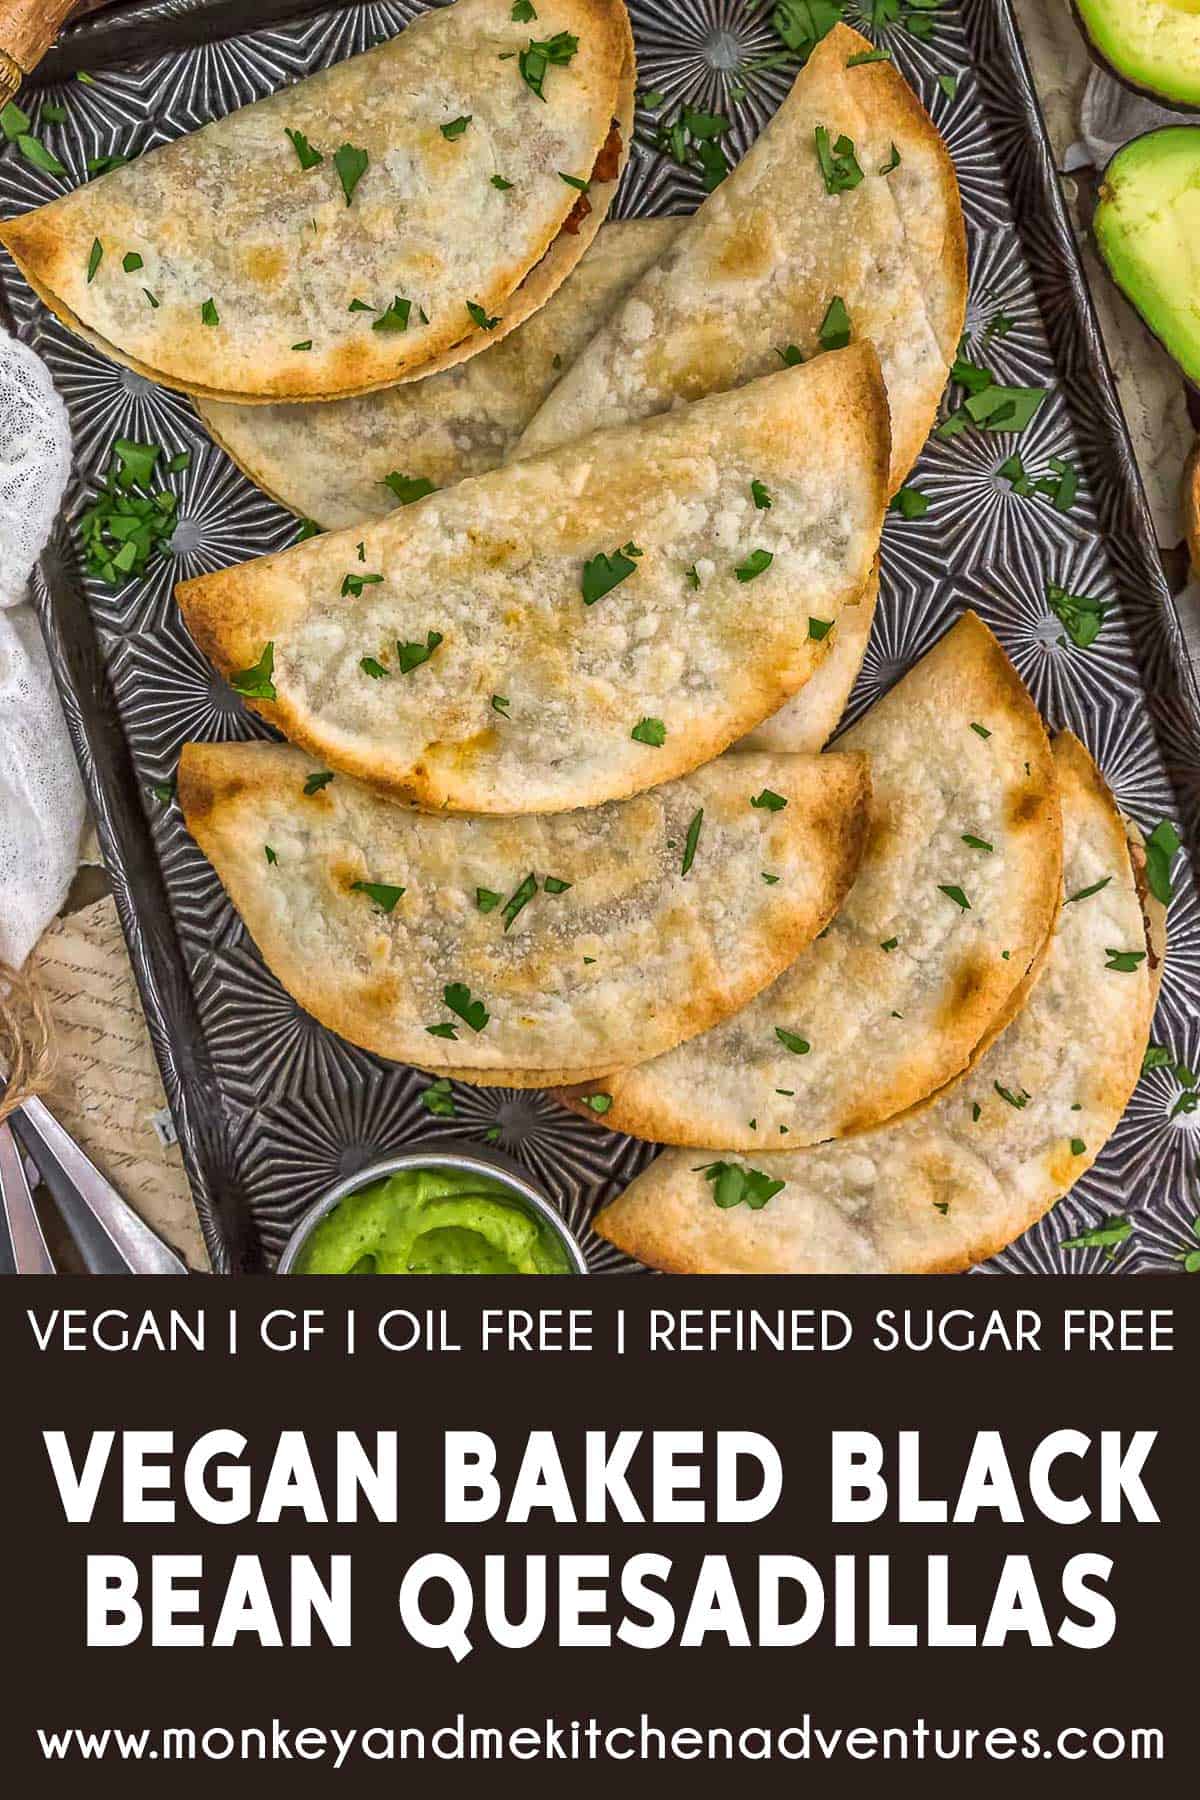 Vegan Baked Black Bean Quesadillas with Text Description